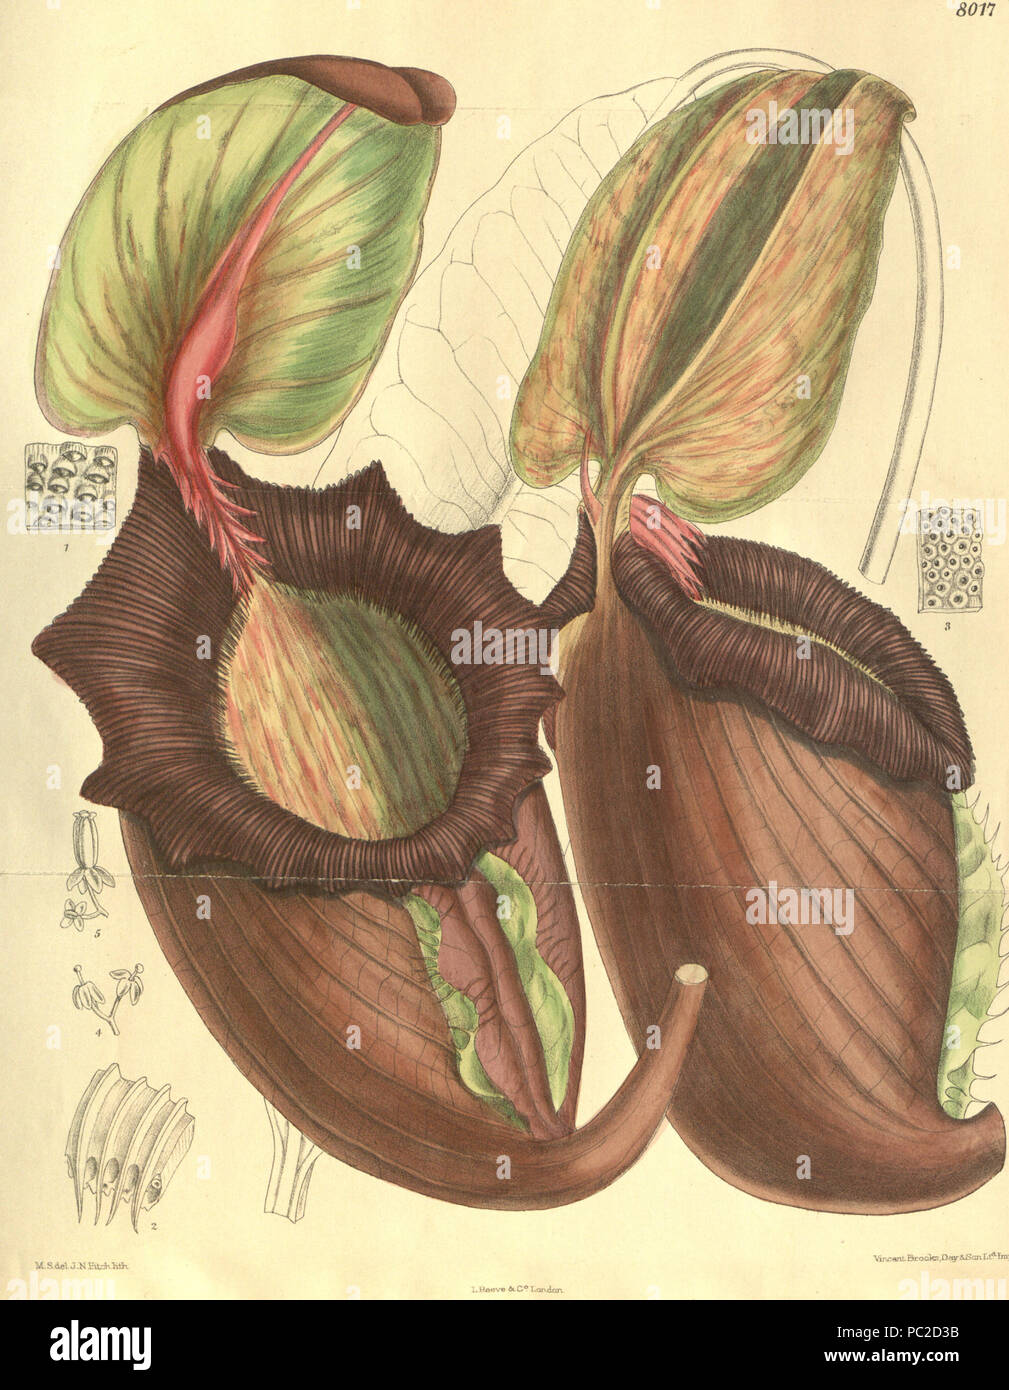 440 Nepenthes rajah - Curtis’s Botanical Magazine (1905) Stock Photo